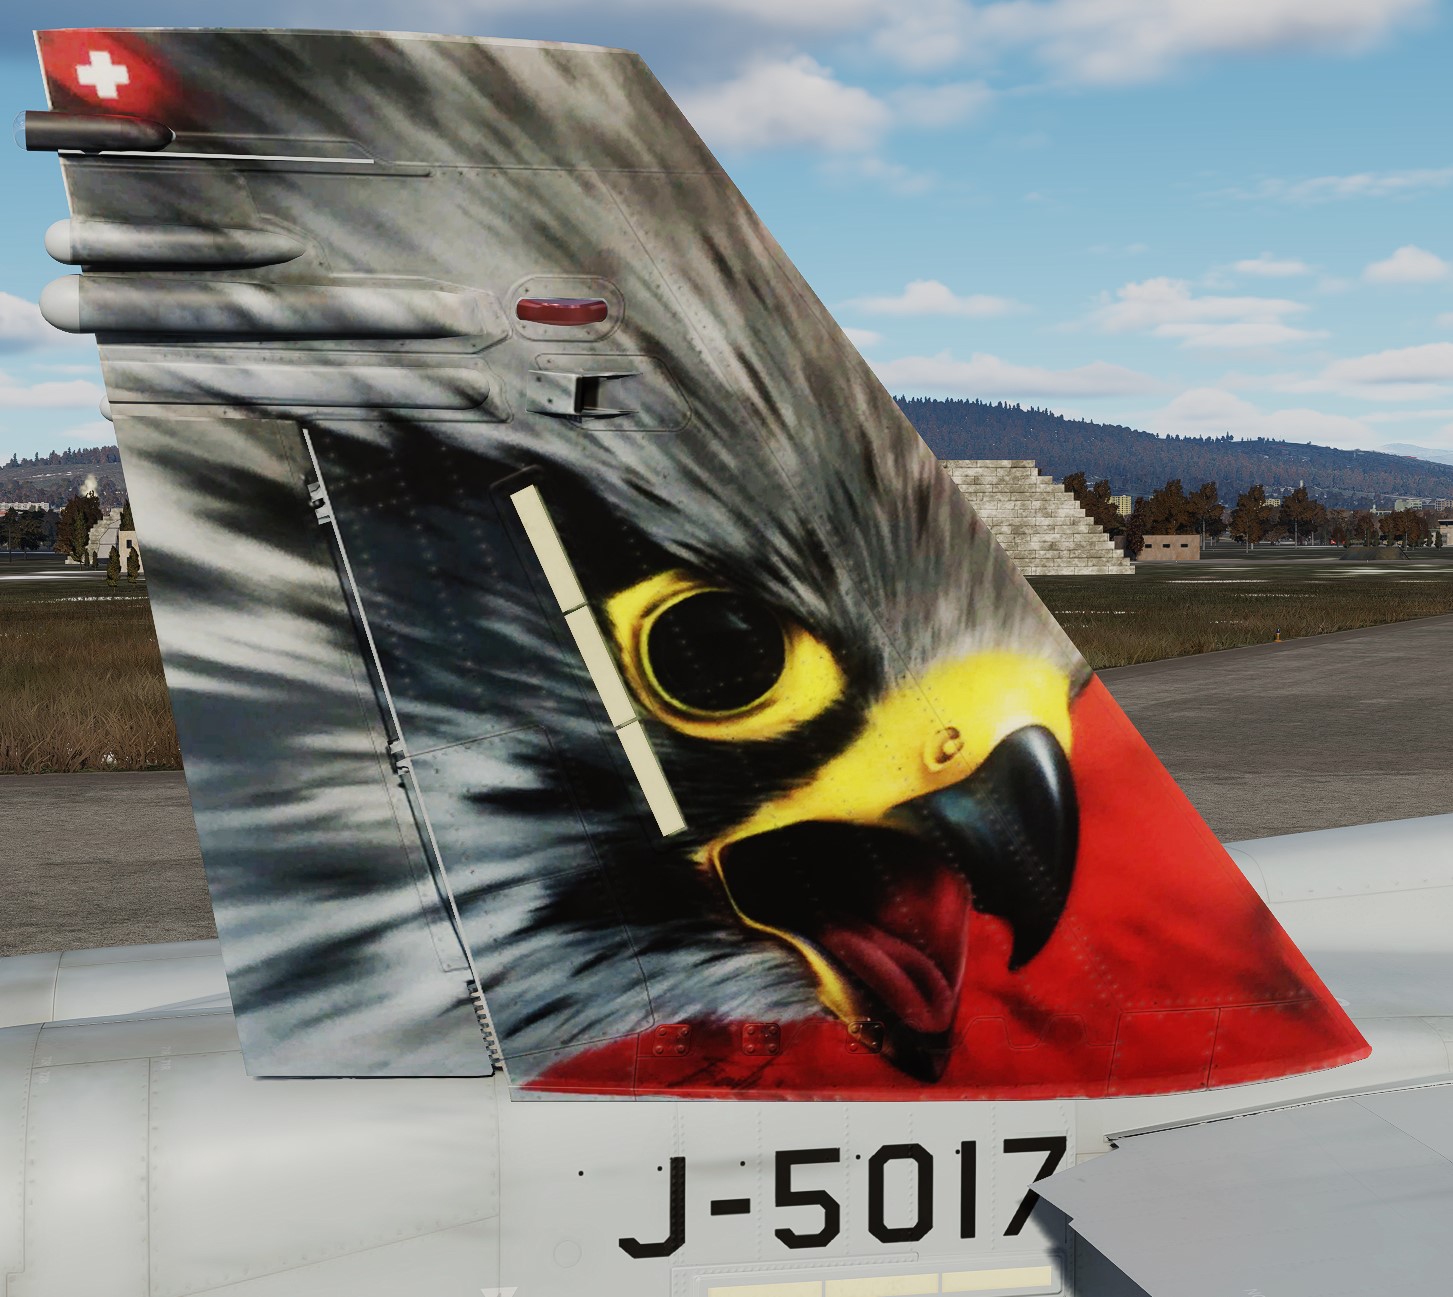 4k Swiss Air Force J-5017 Falcons 2018